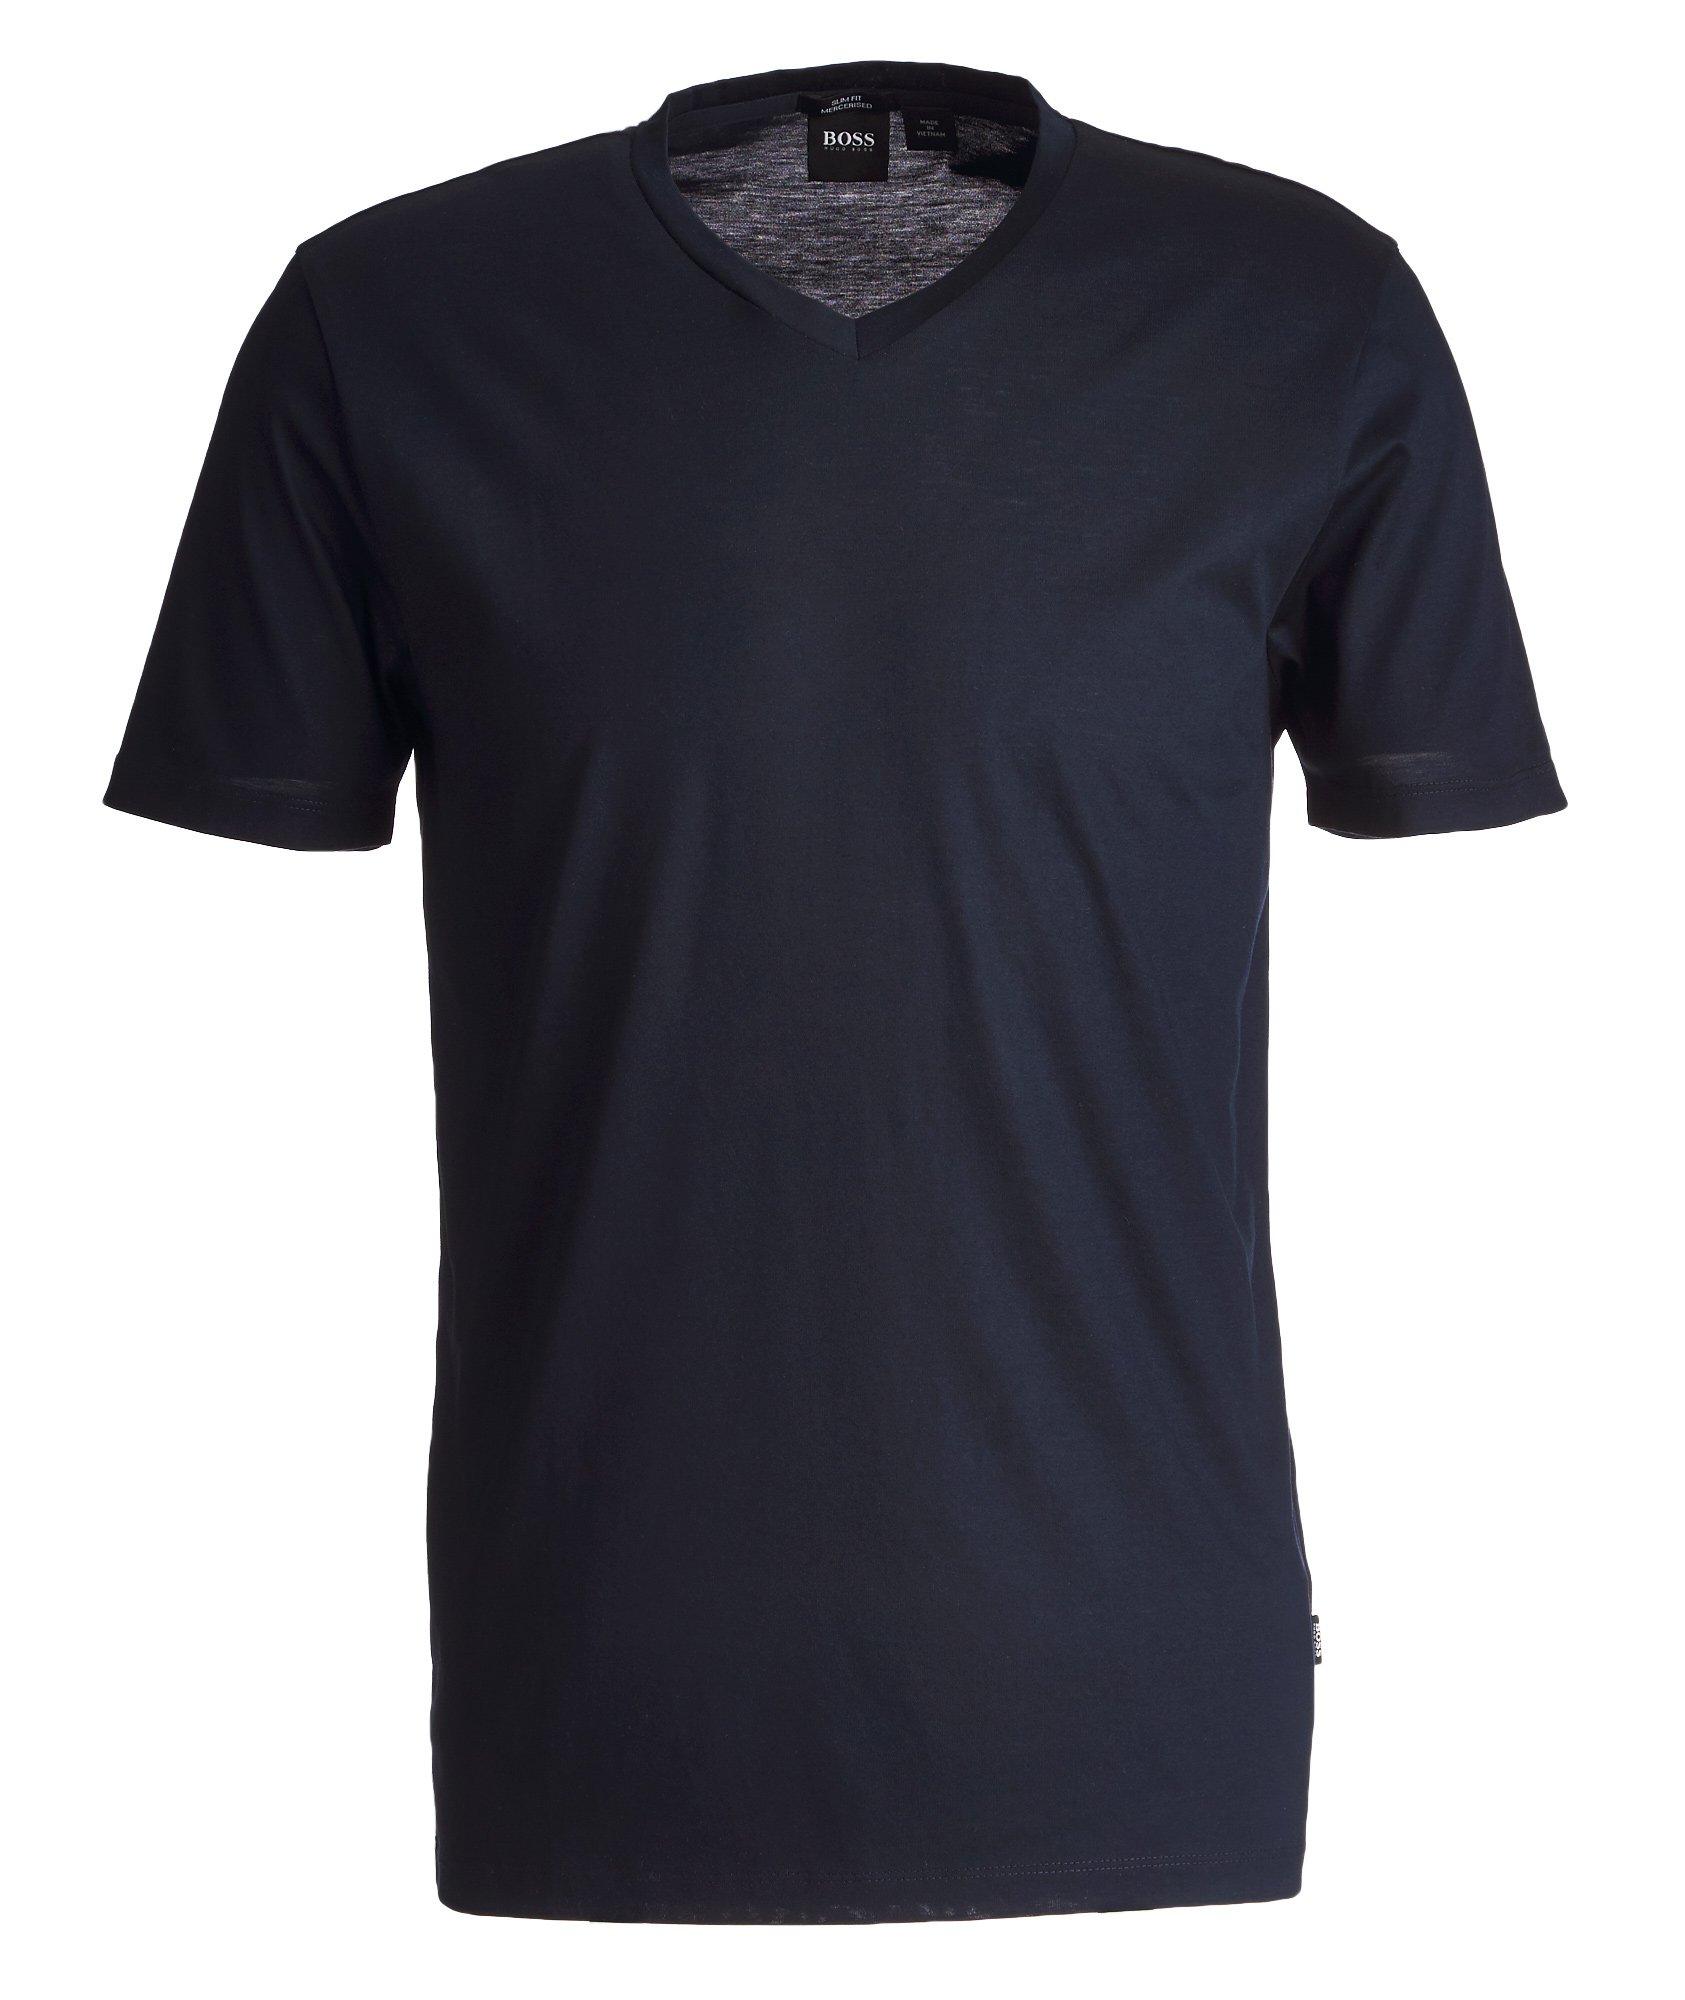 V-Neck Mercerized Cotton T-Shirt image 0